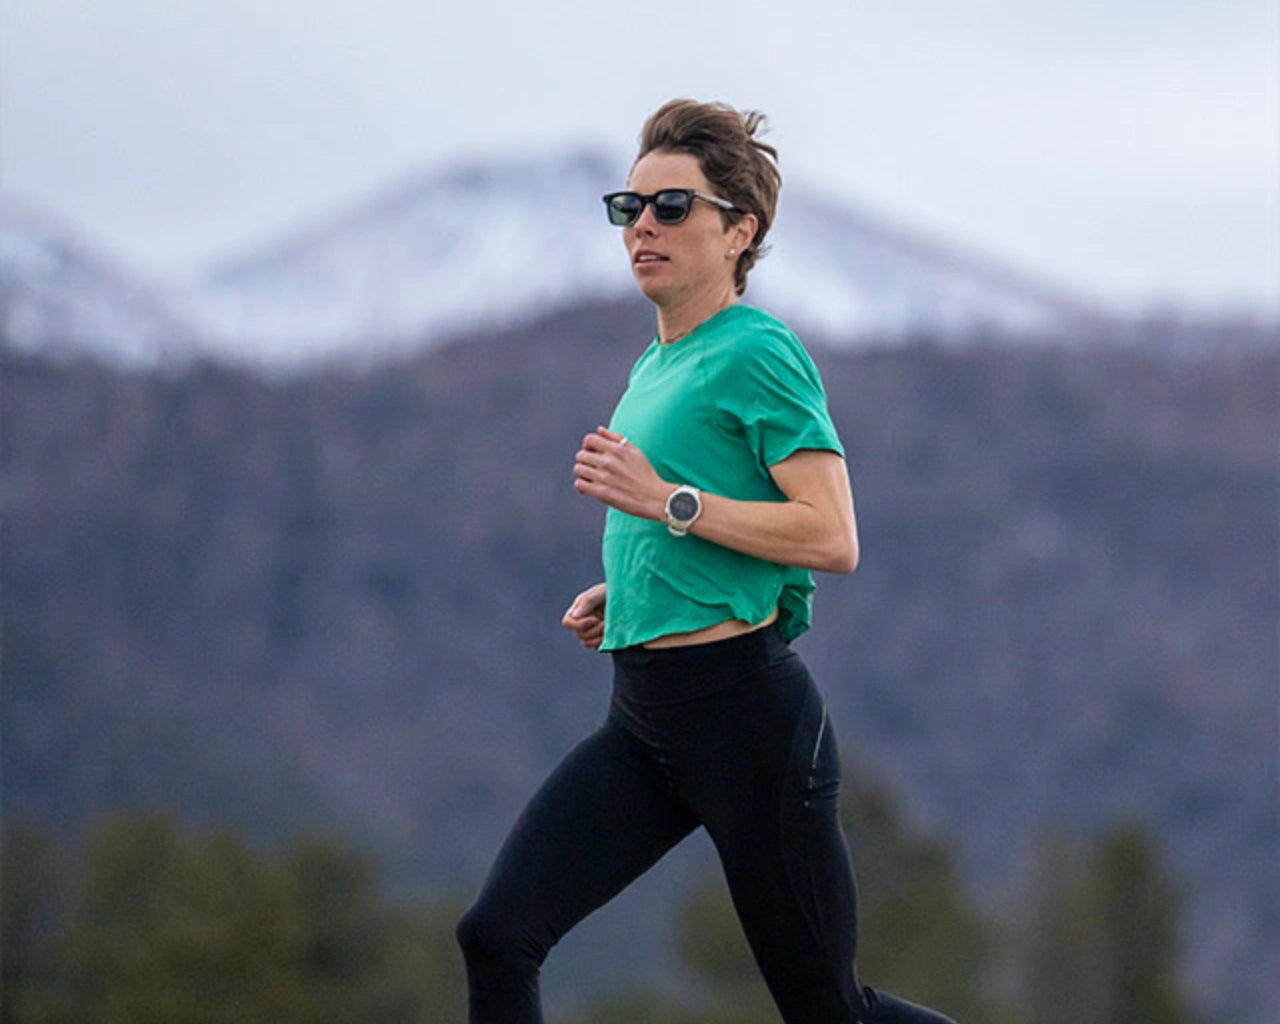 Professional runner Nikki Hiltz. Photo credit: Article One